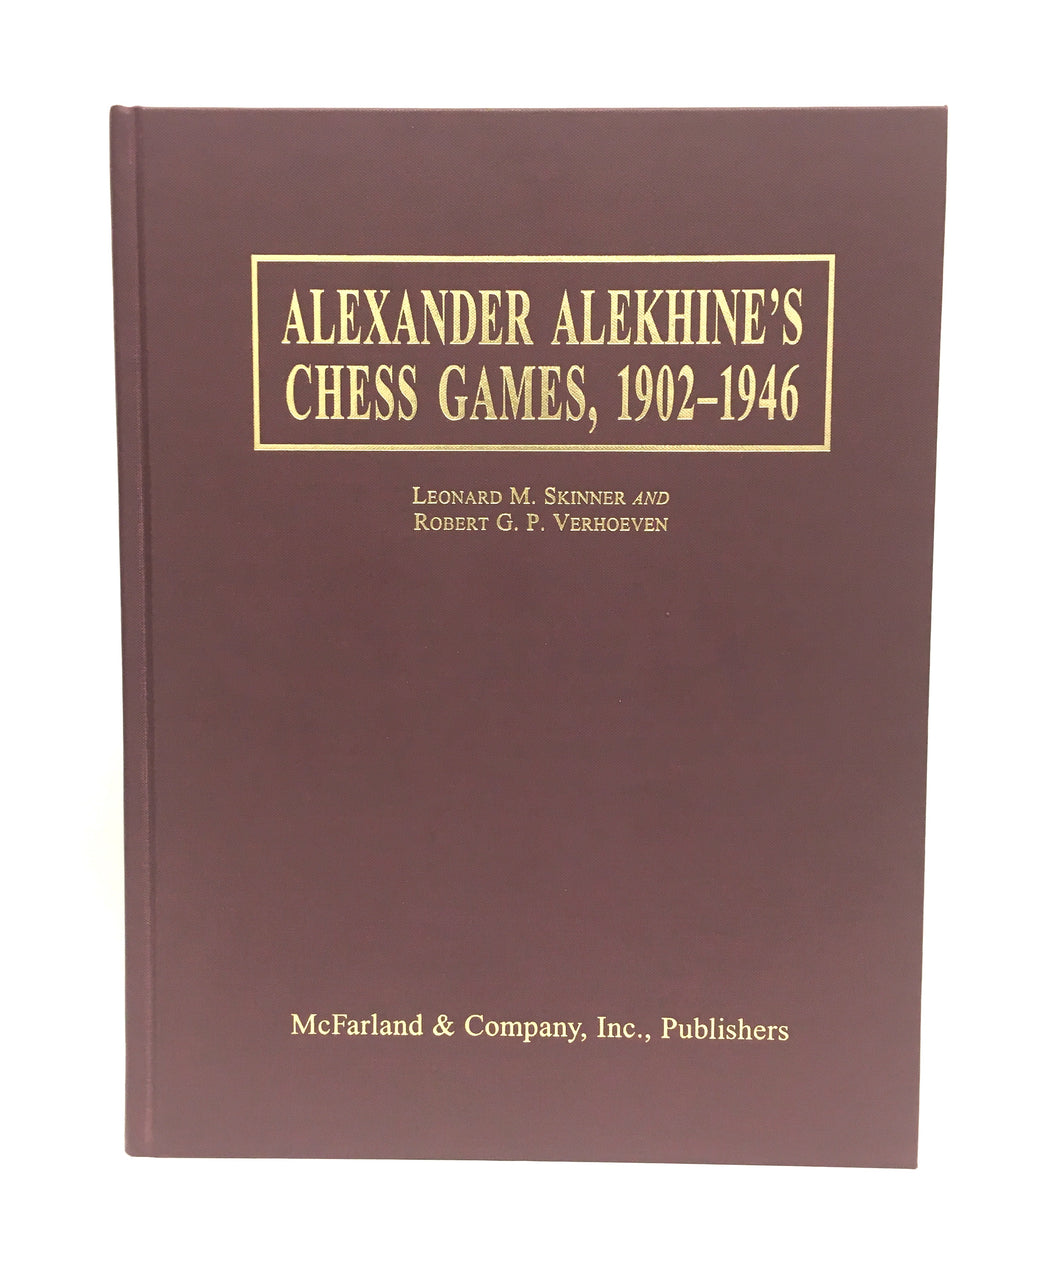 Alexander Alekhine's Chess Games